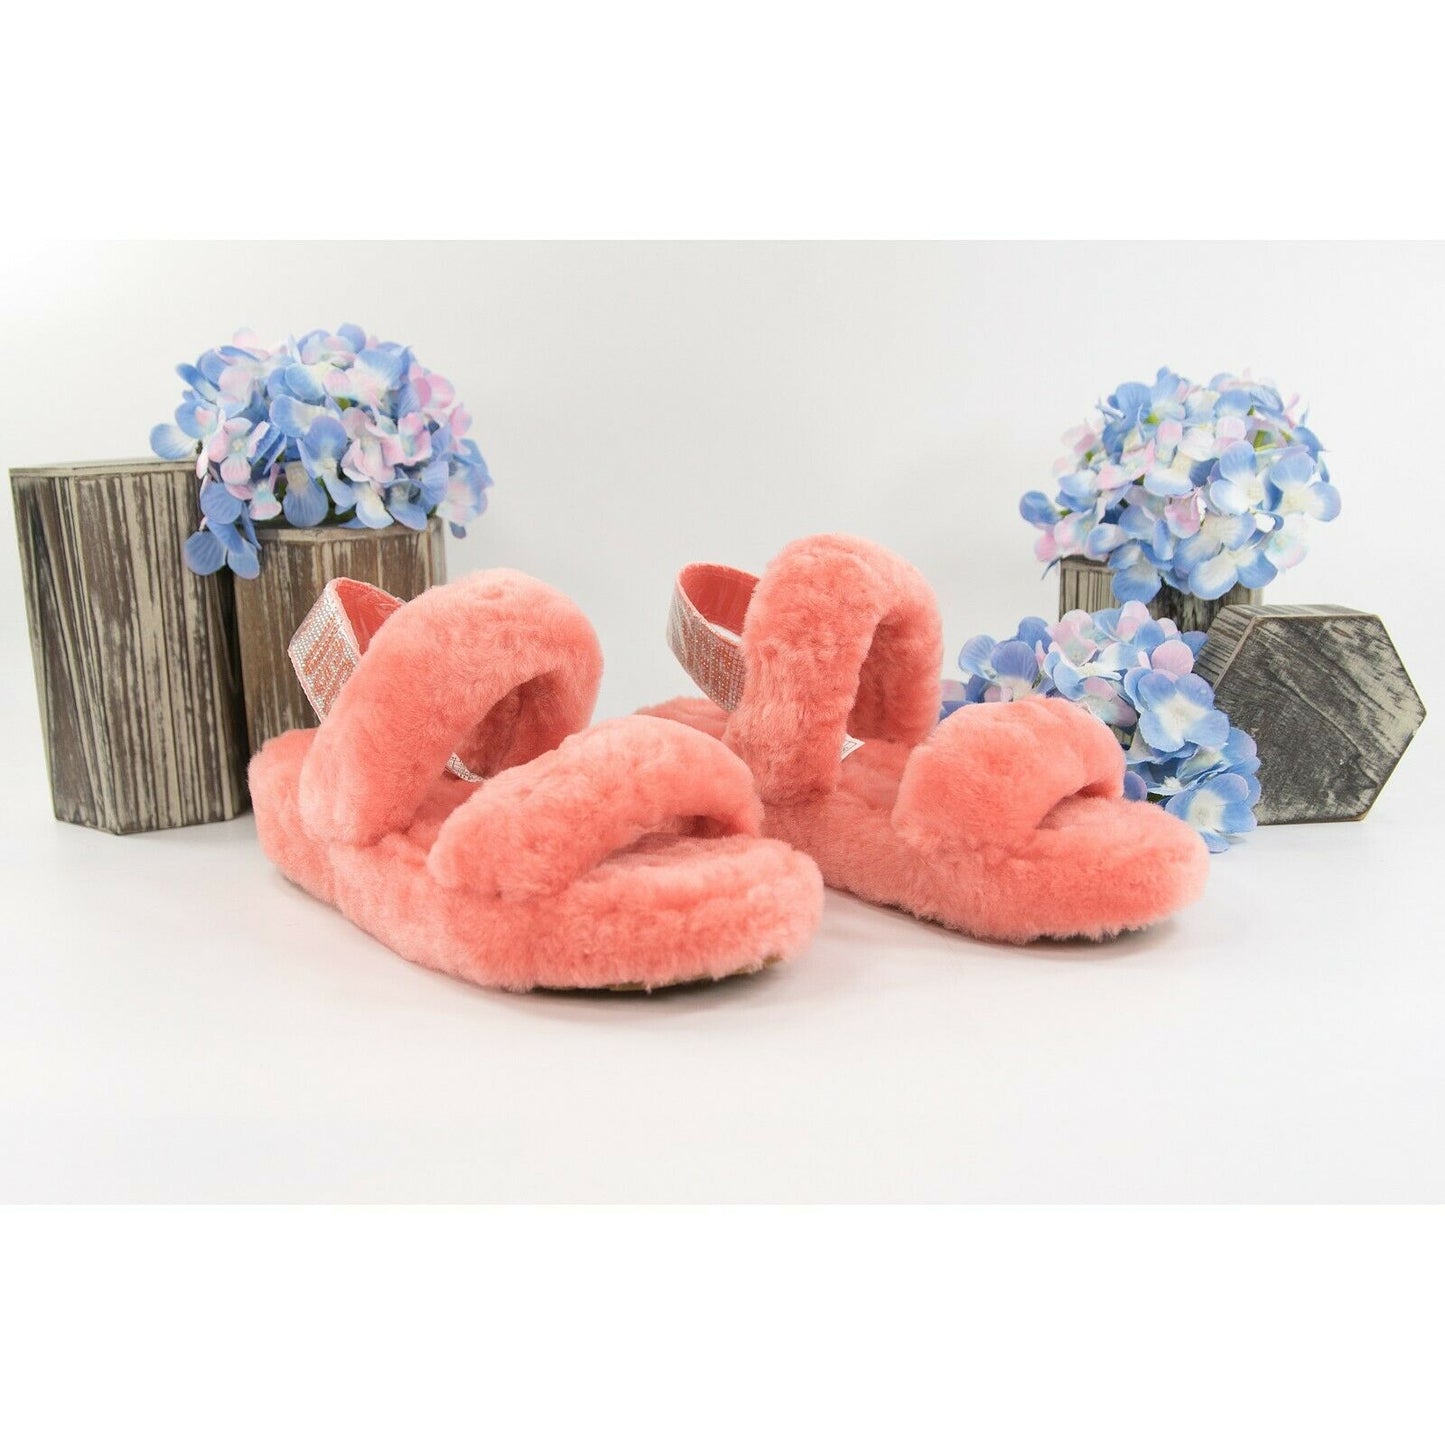 UGG Fluff Oh Yea Coral Bling Sheepskin Fur Slippers Slides Sandals Sz 6 NIB